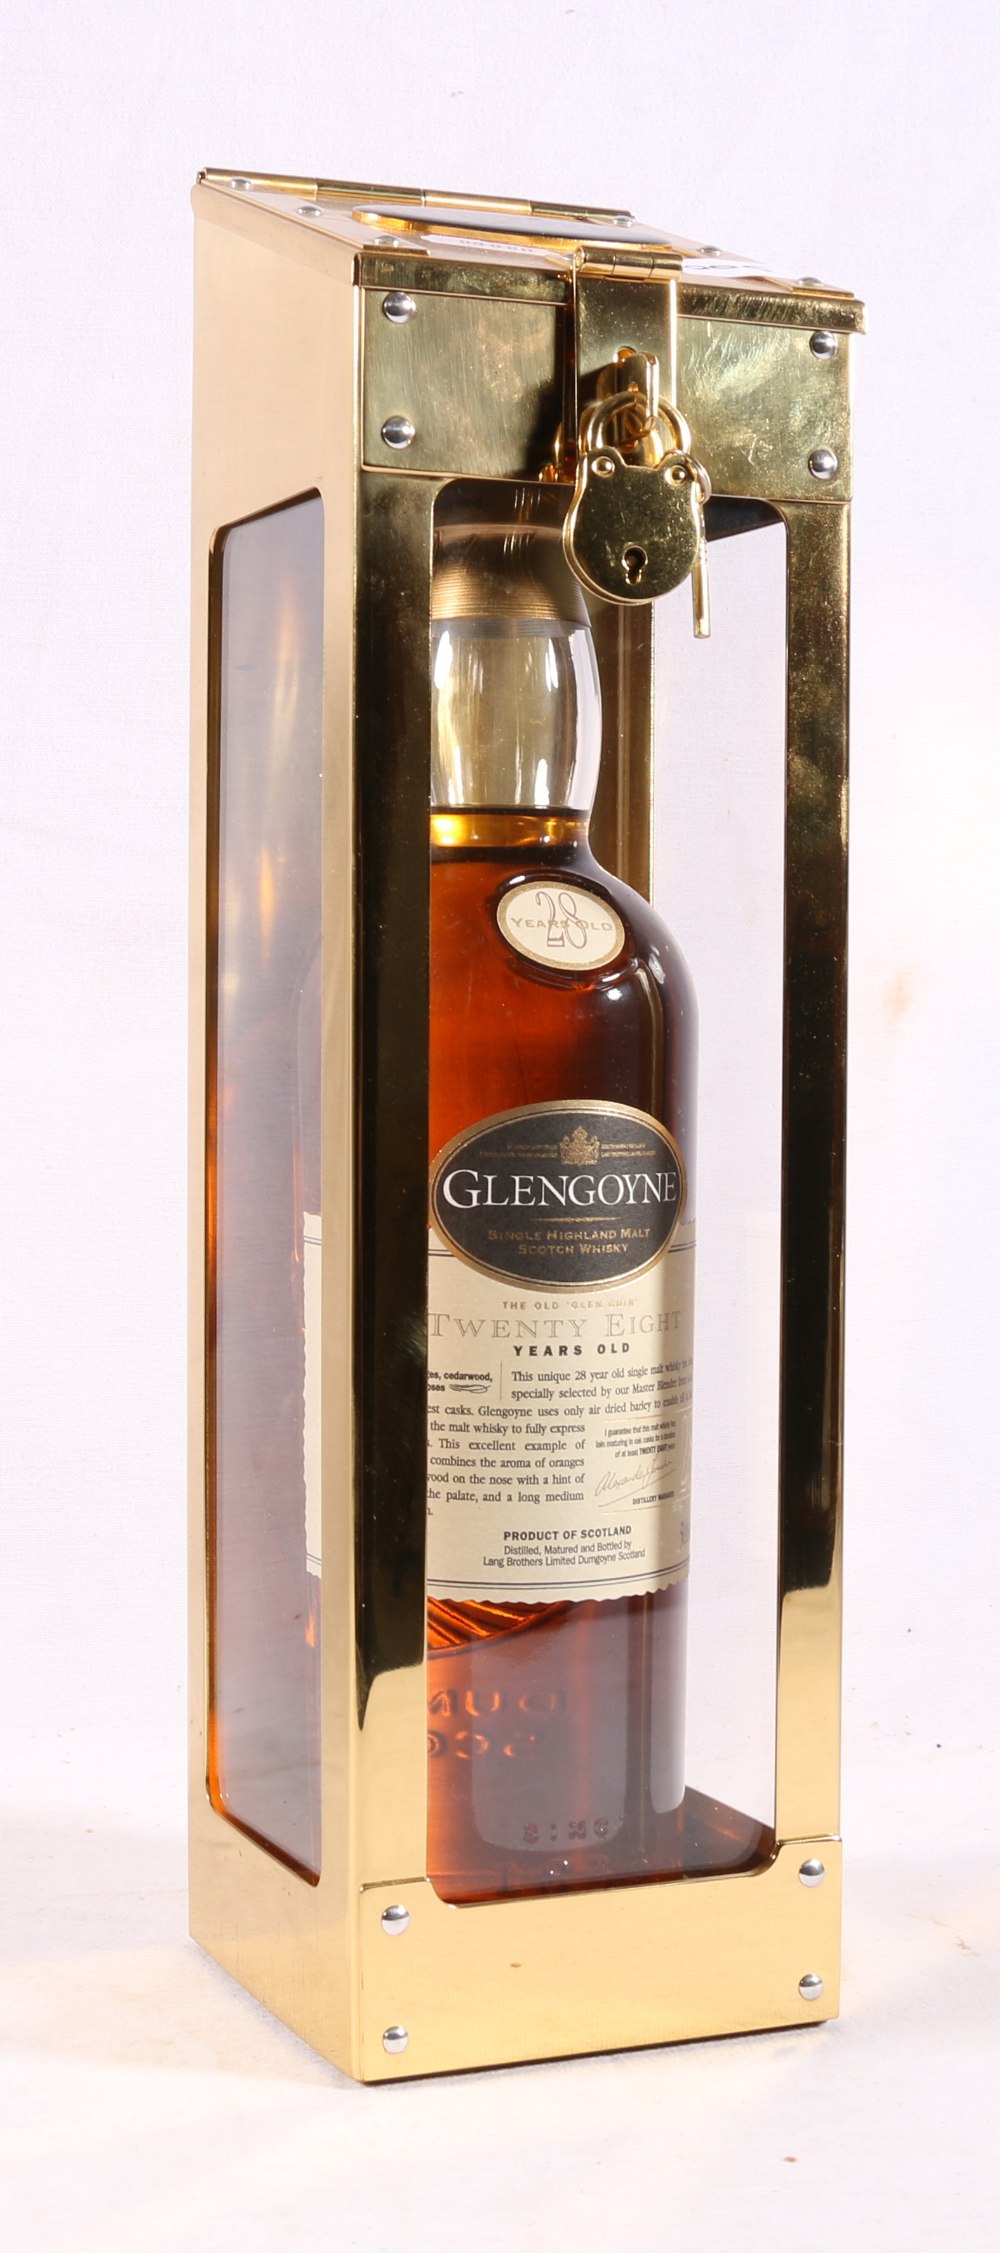 GLENGOYNE twenty eight year old Highland single malt Scotch whisky, 70cl 50.